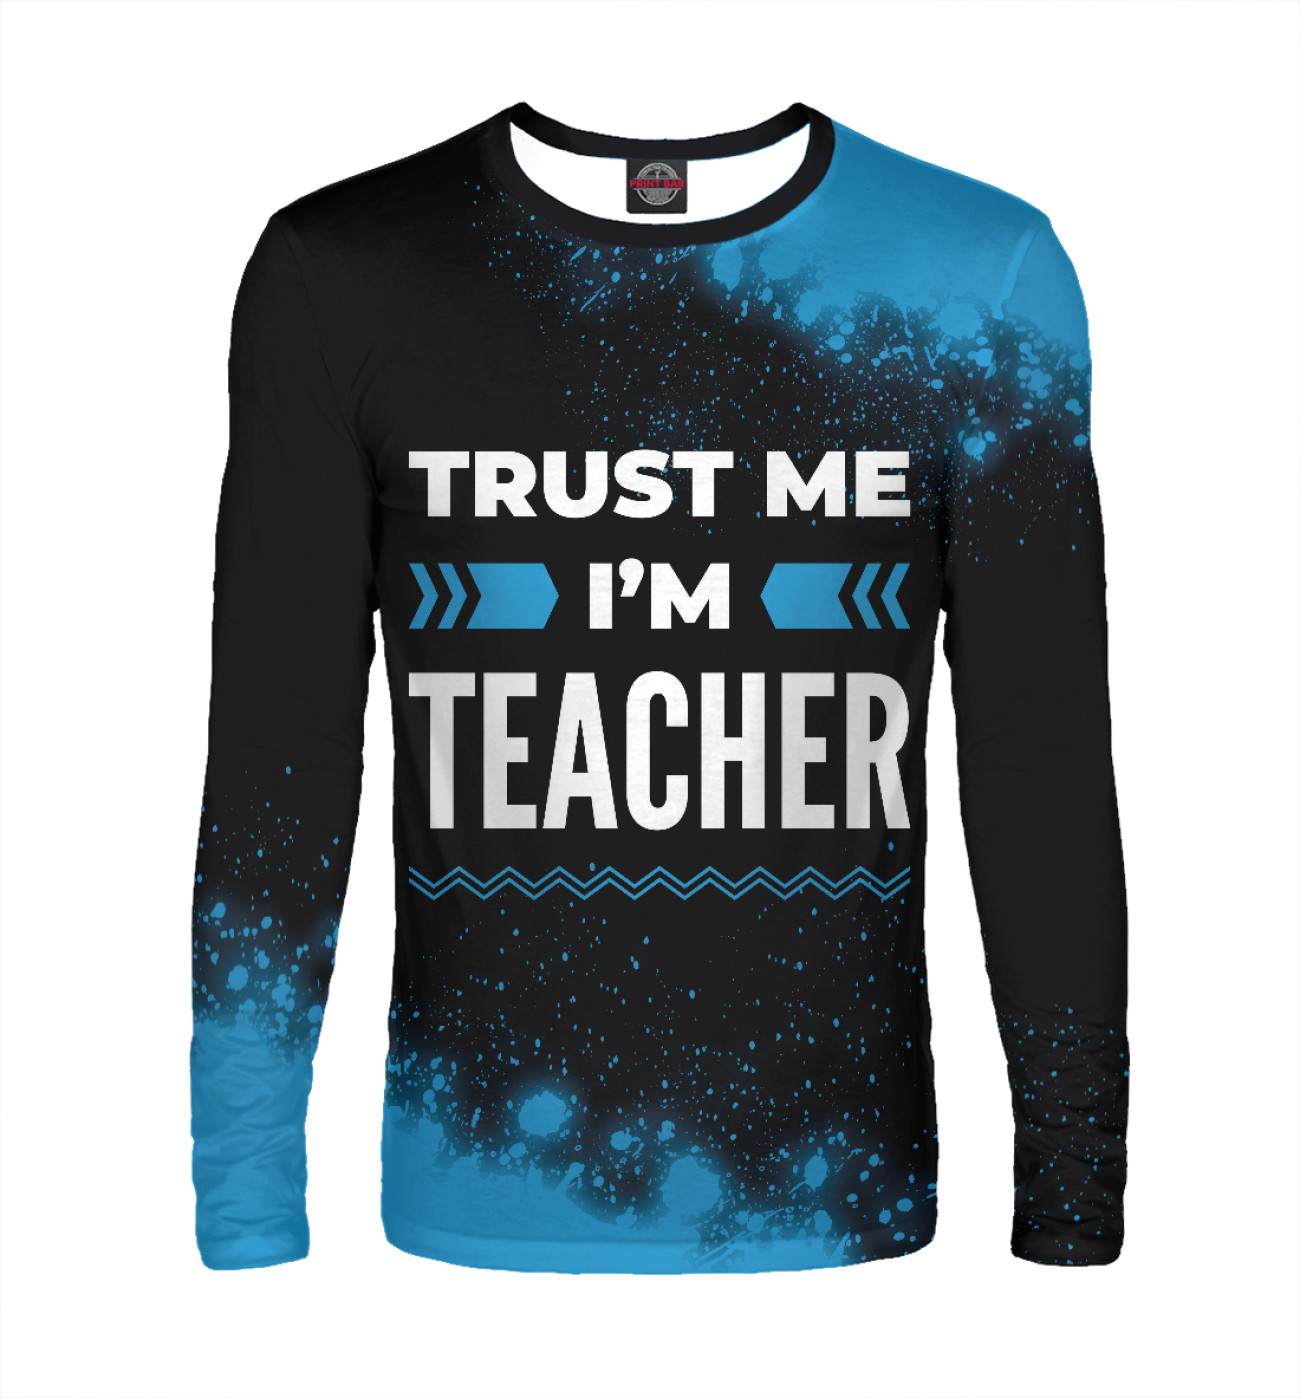 Мужской Лонгслив Trust me I'm Teacher, артикул: PRP-379237-lon-2